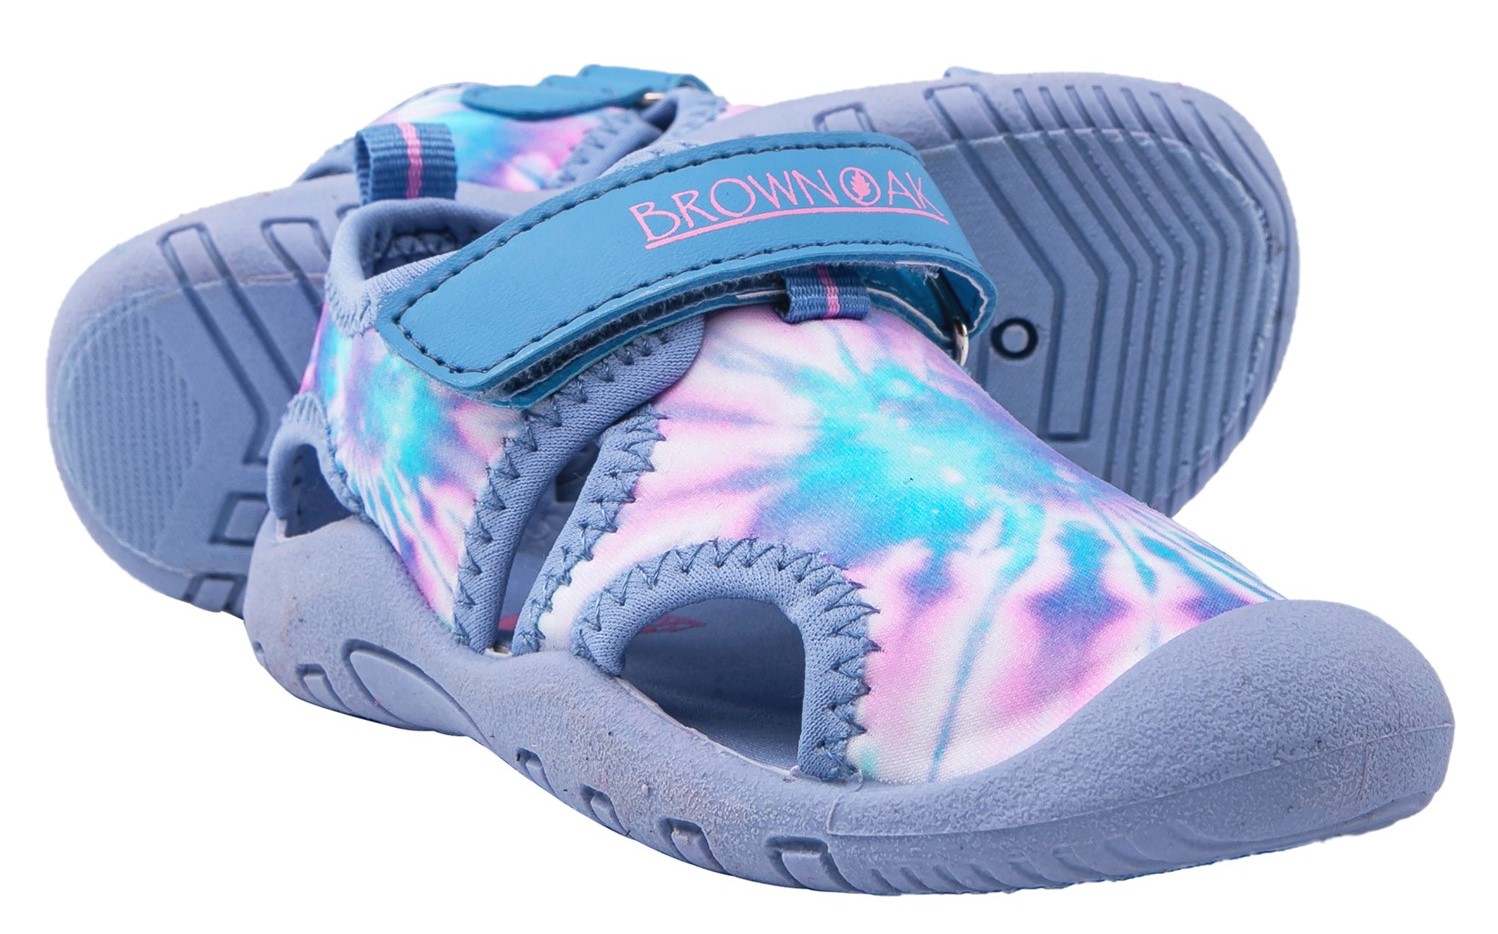 Baby Boys Girls Sports Sandals Lightweight Anti-Slip Rubber Sole Beach Aquatic Water Shoes Summer Toddler First Walking Shoe